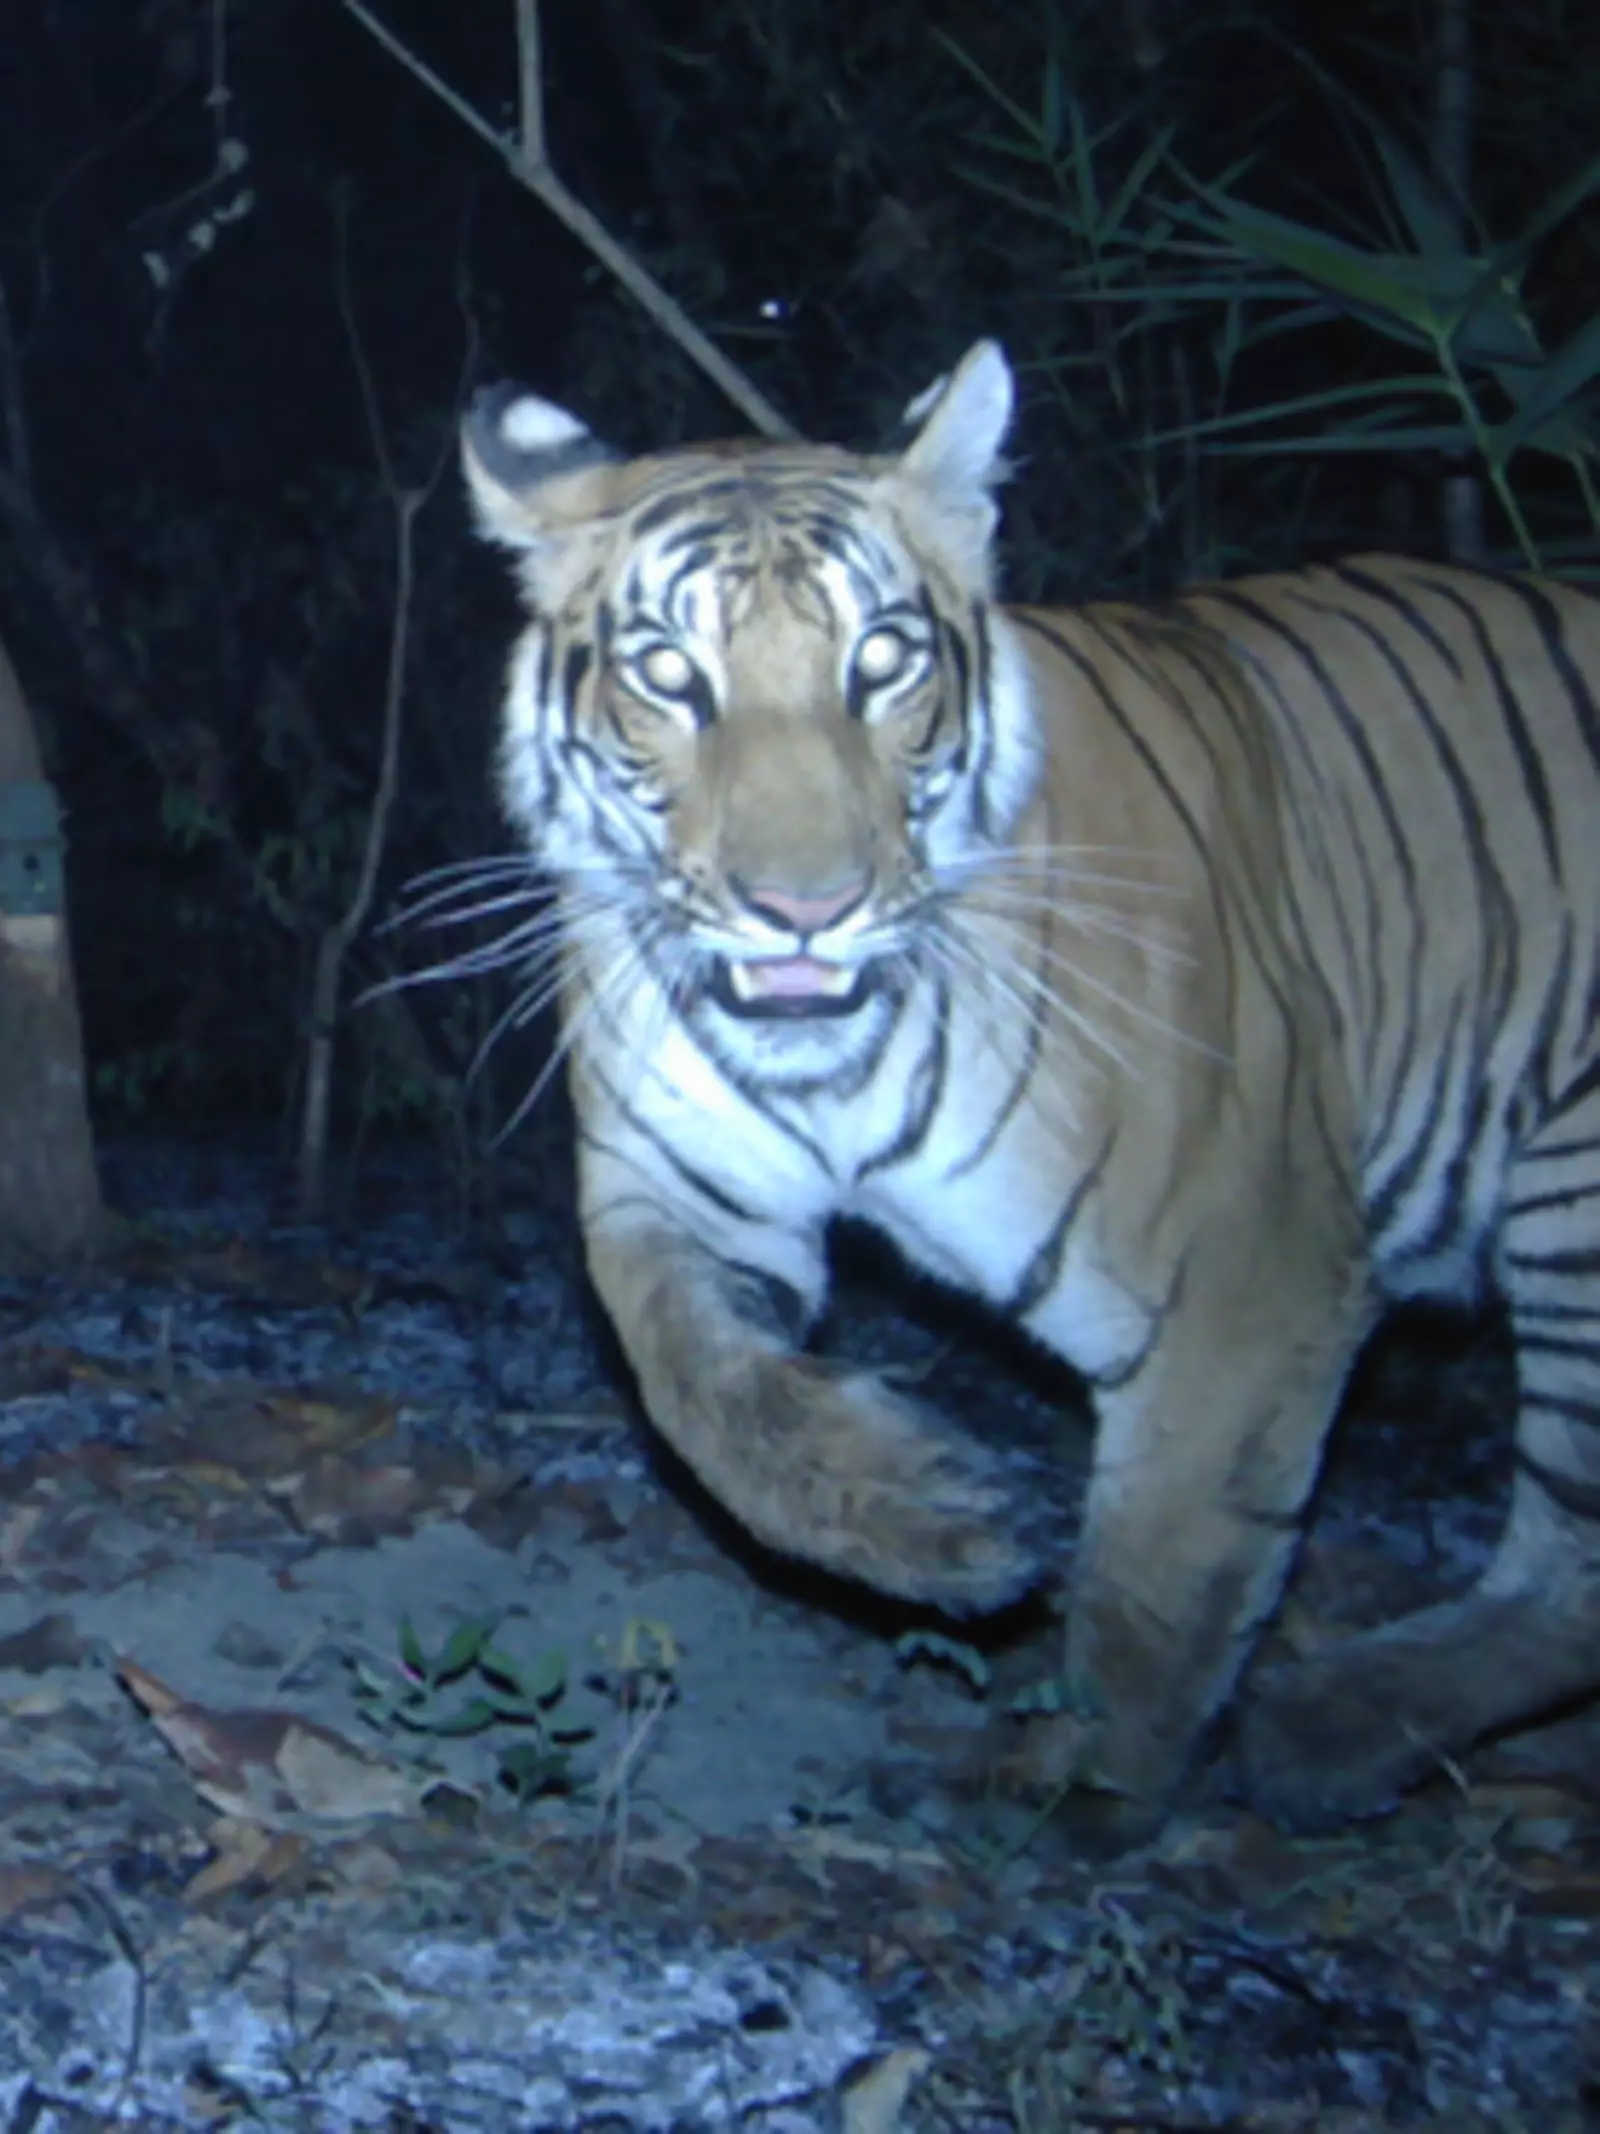 A tiger caught on a camera trap